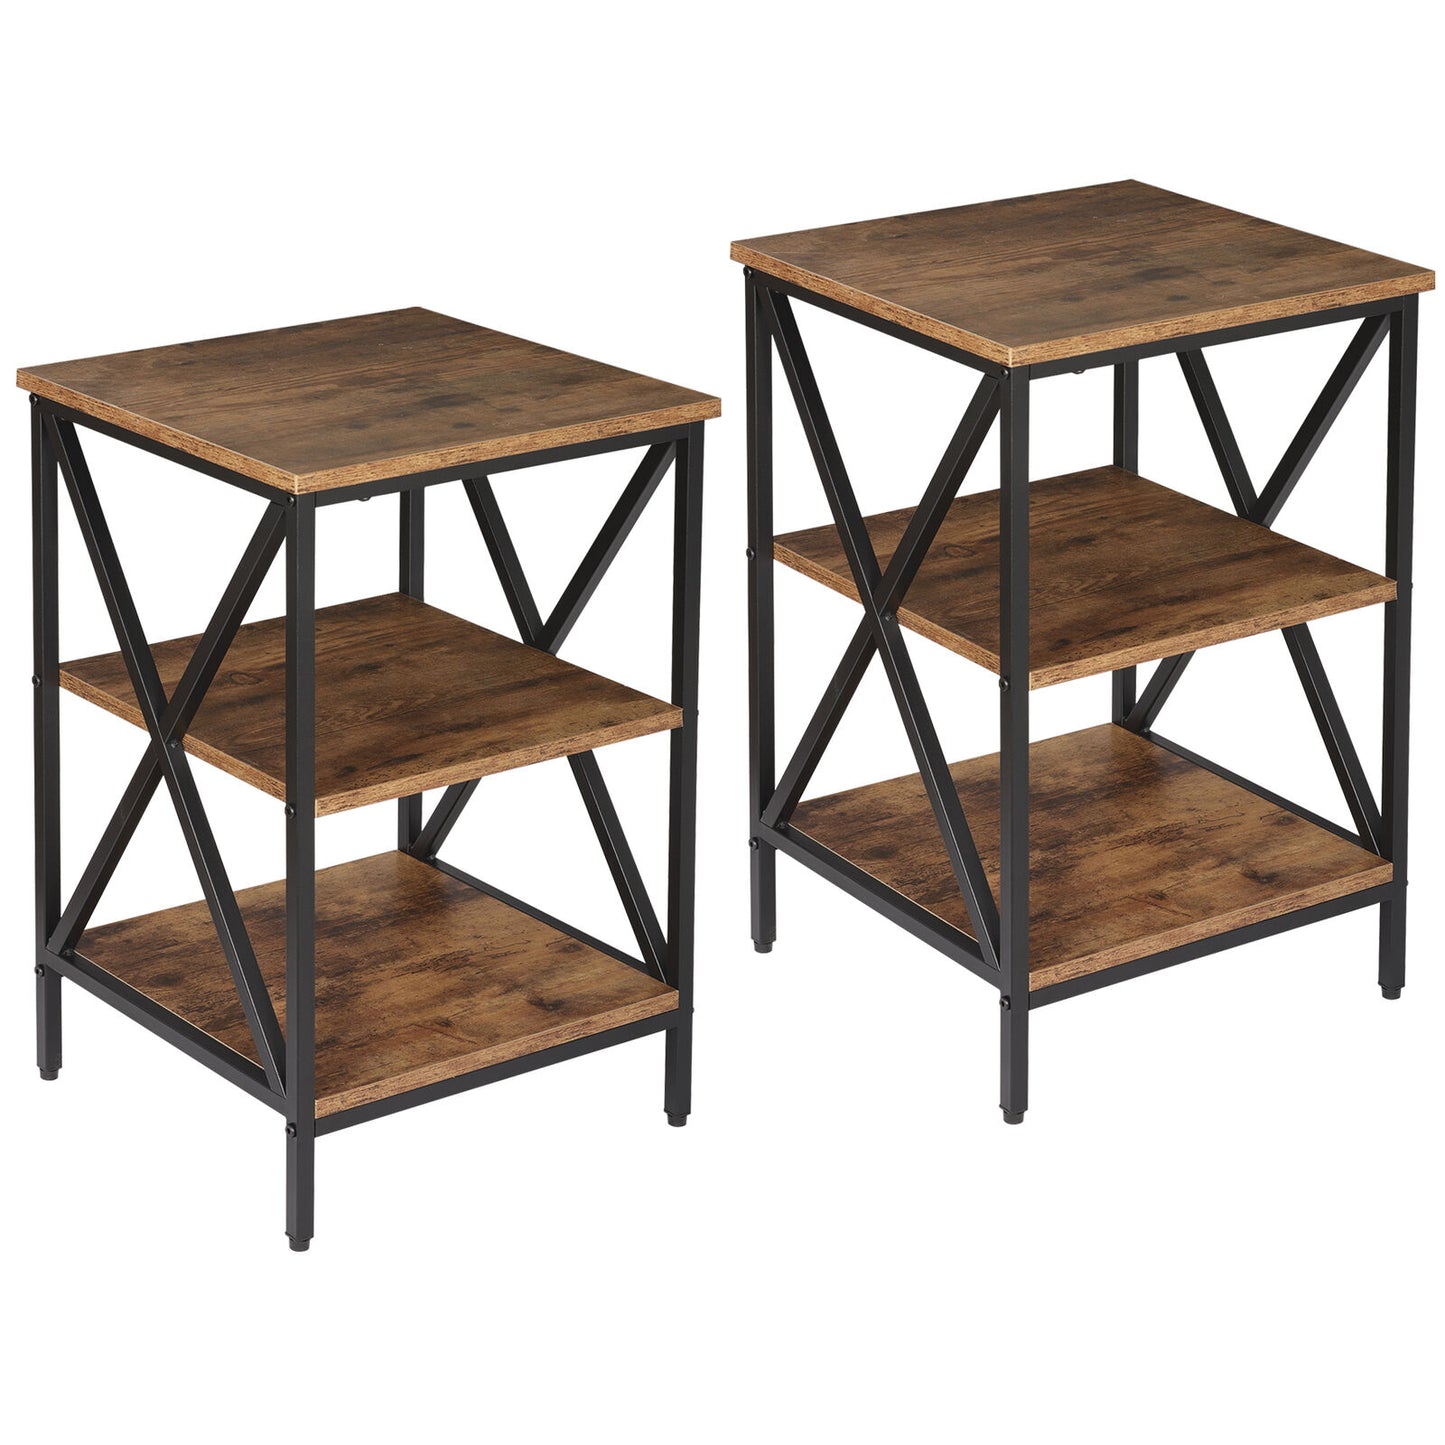 Set of 2 3-Tier Side Table X Design End Table Metal Frame Storage Shelves Brown